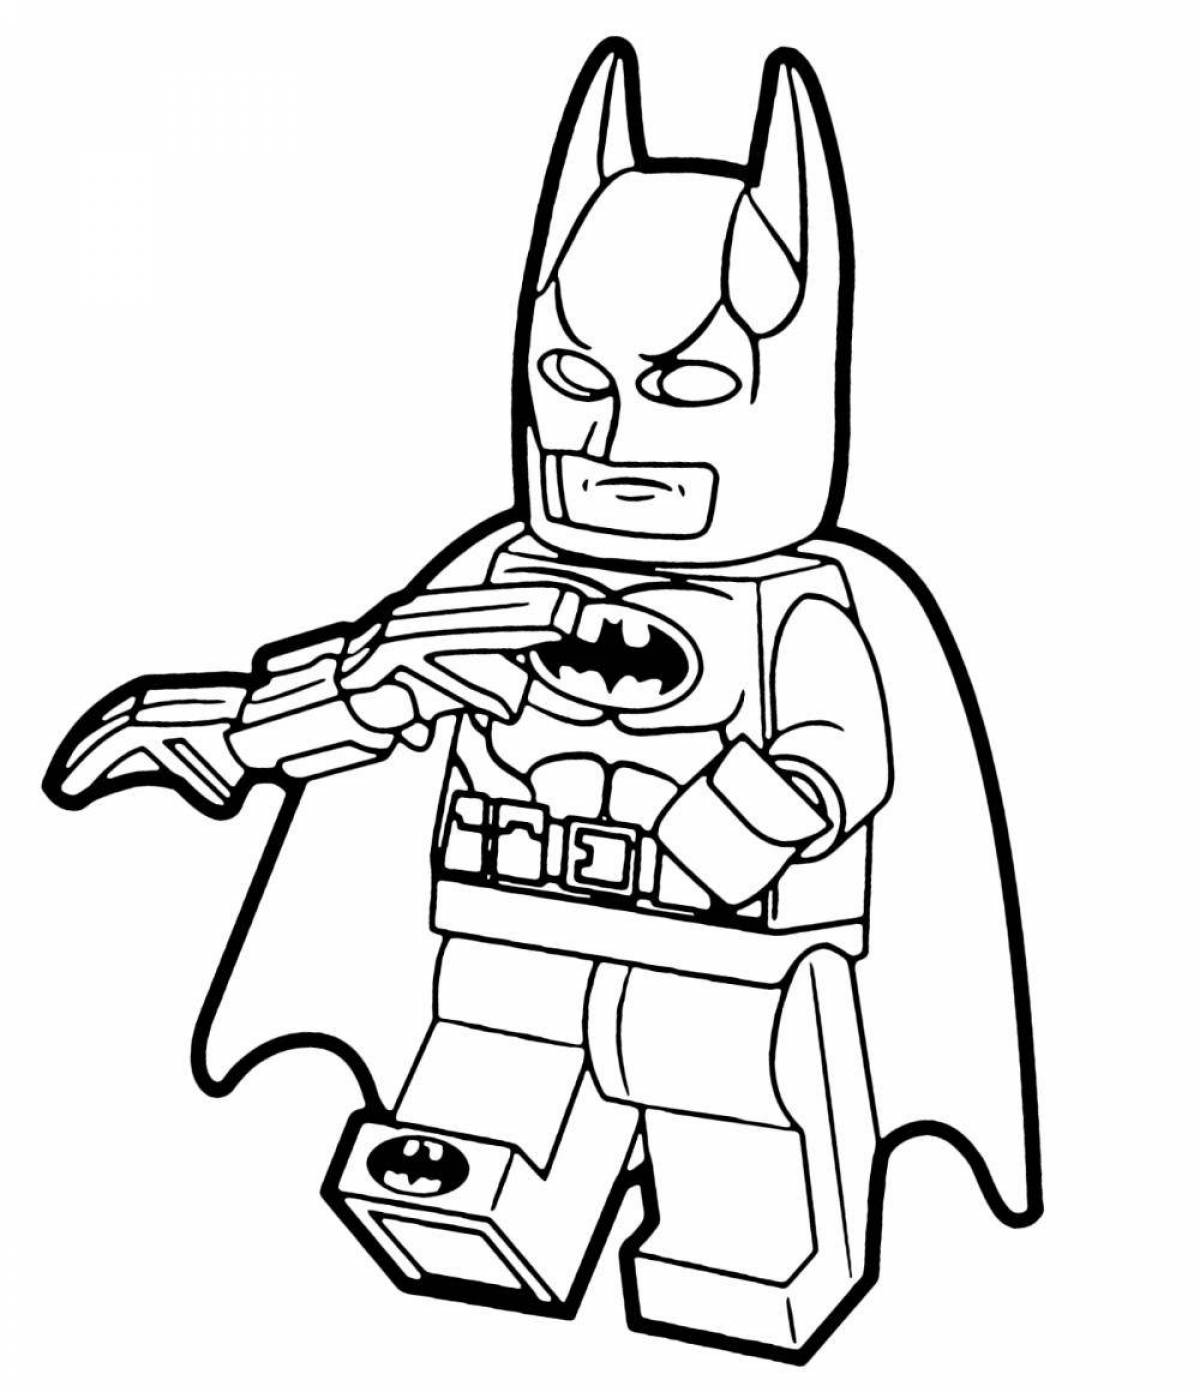 Lego batman hypnotic coloring book